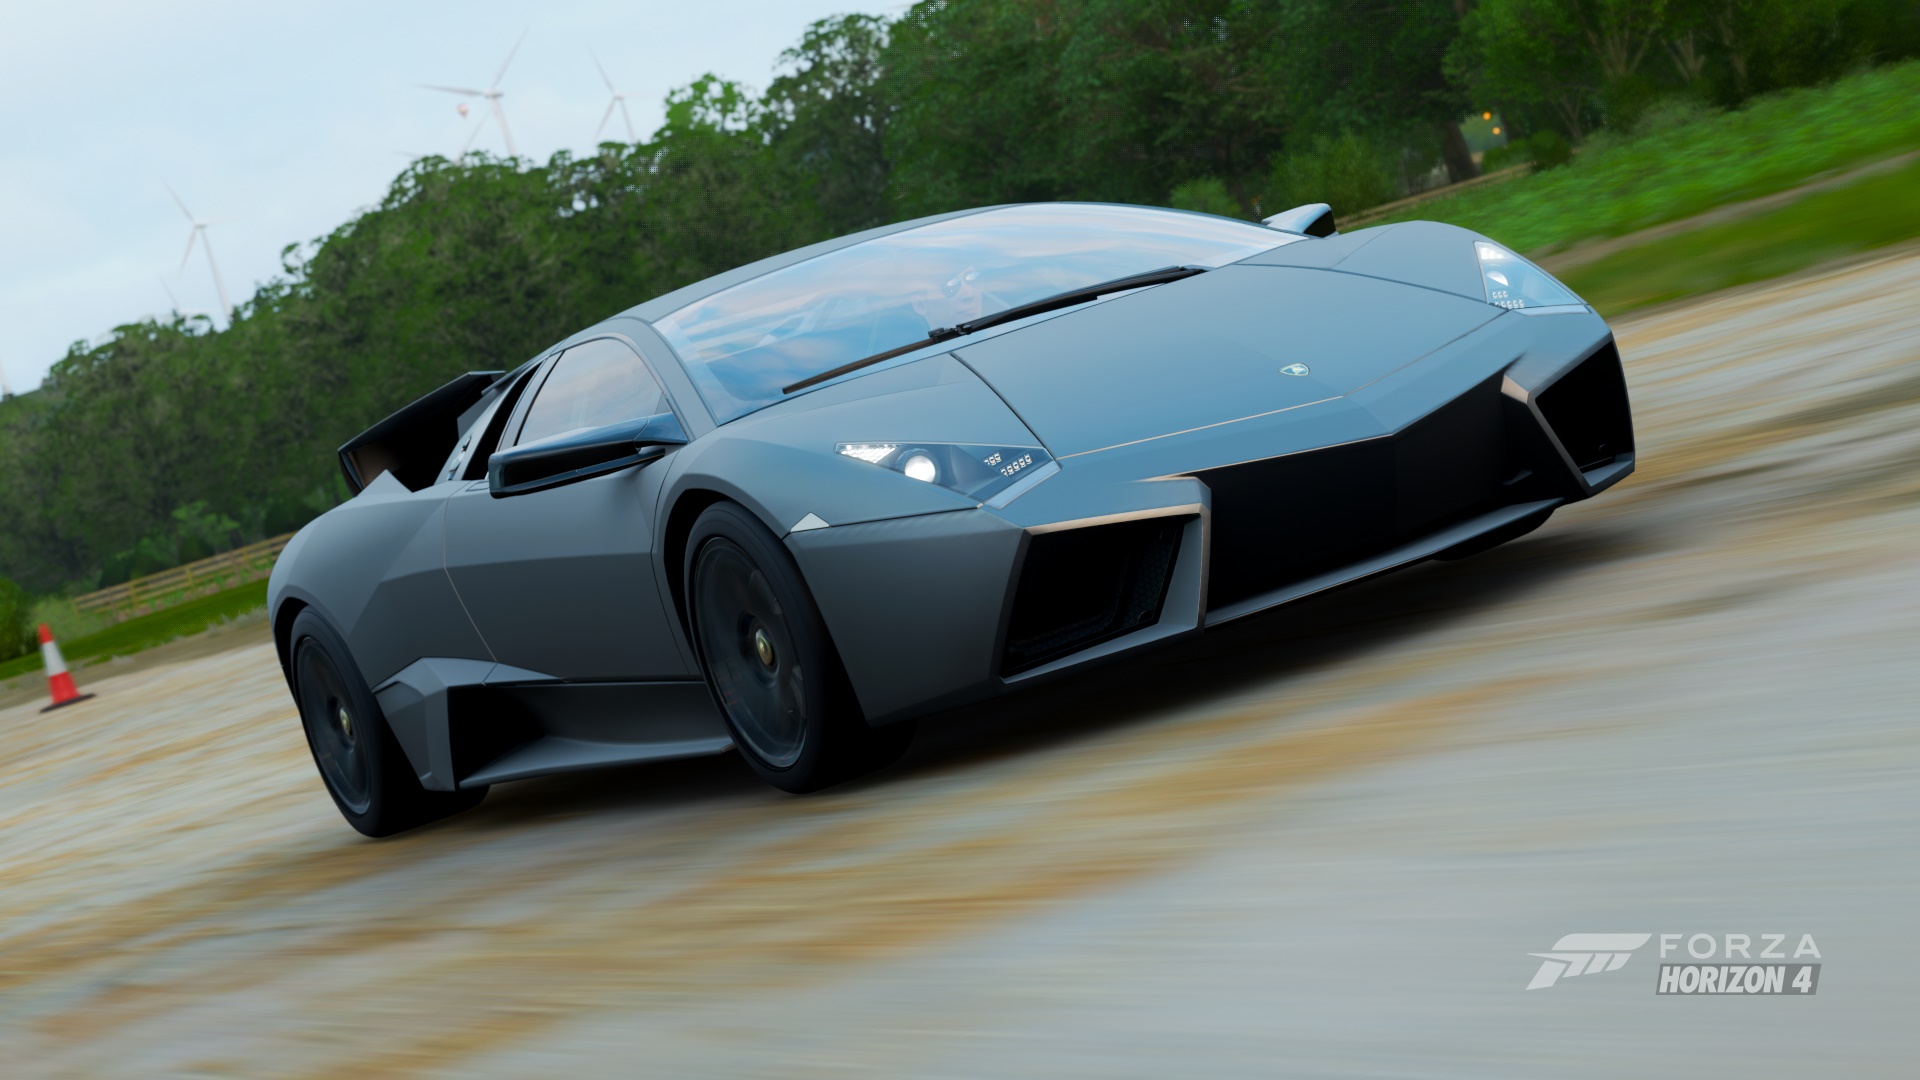 Forza Motorsport 6: When It Rains, It Pours - Xbox Wire